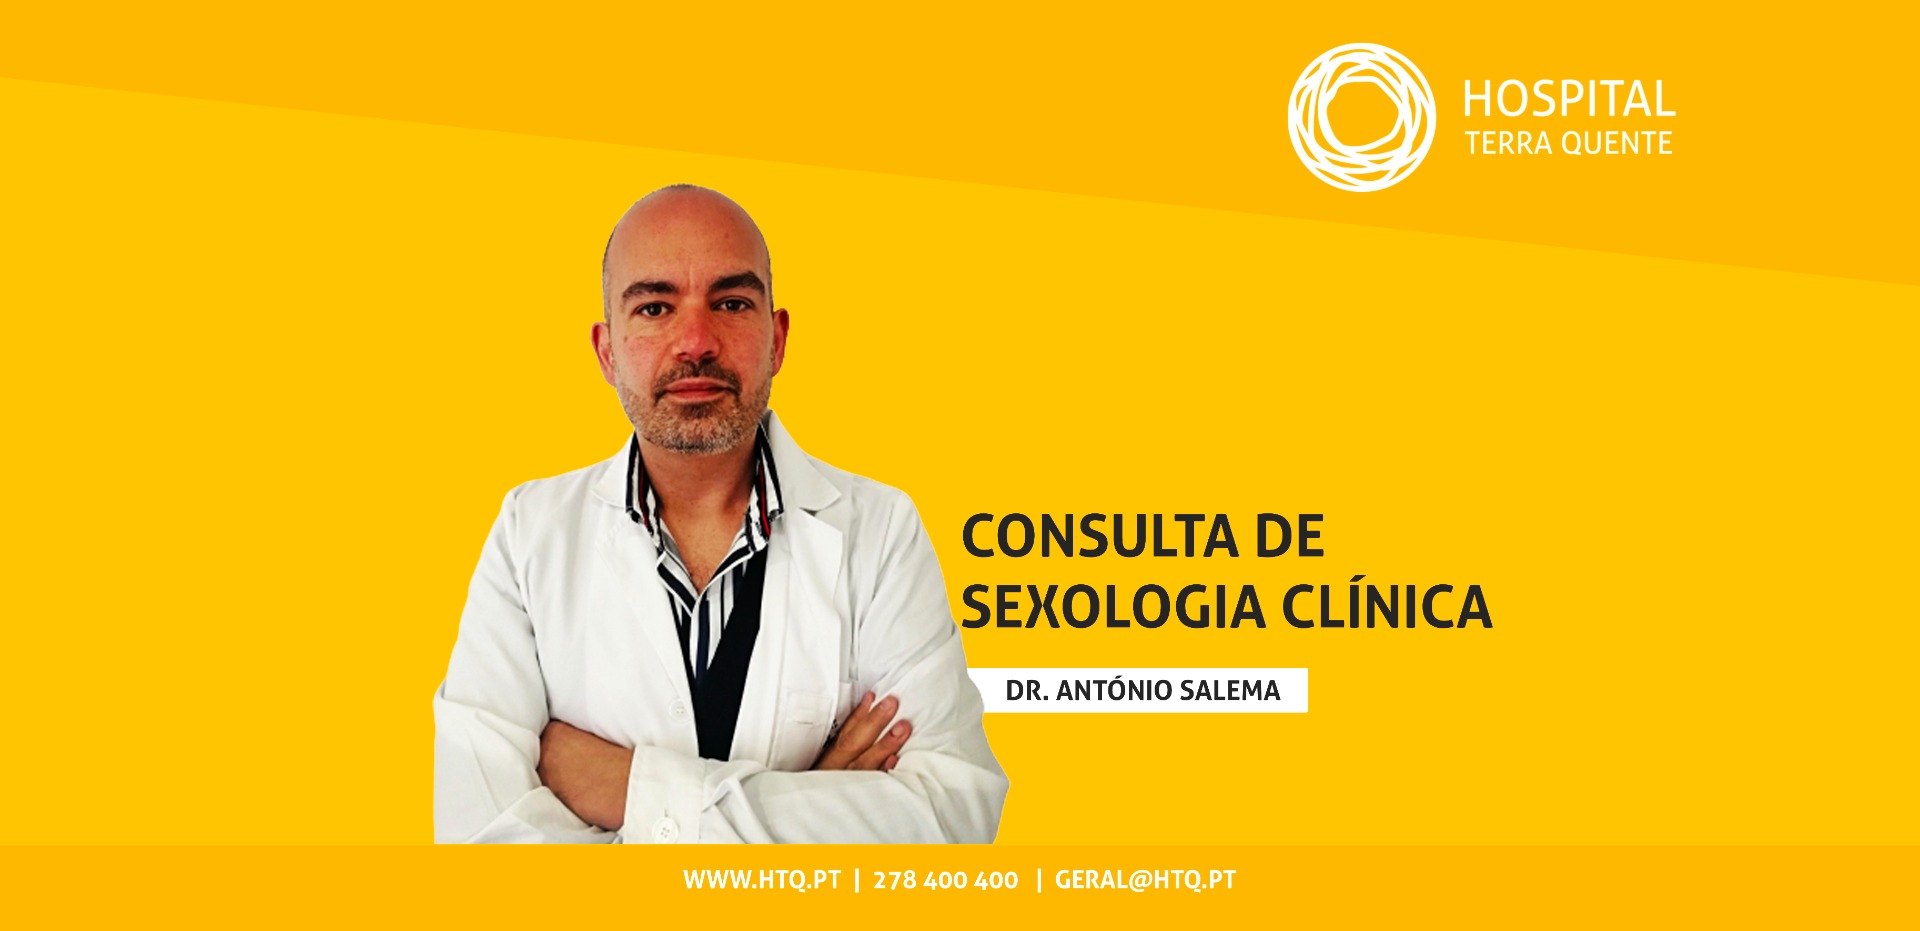 Dr. António Salema assinalou o primeiro Dia Nacional da Saúde Sexual